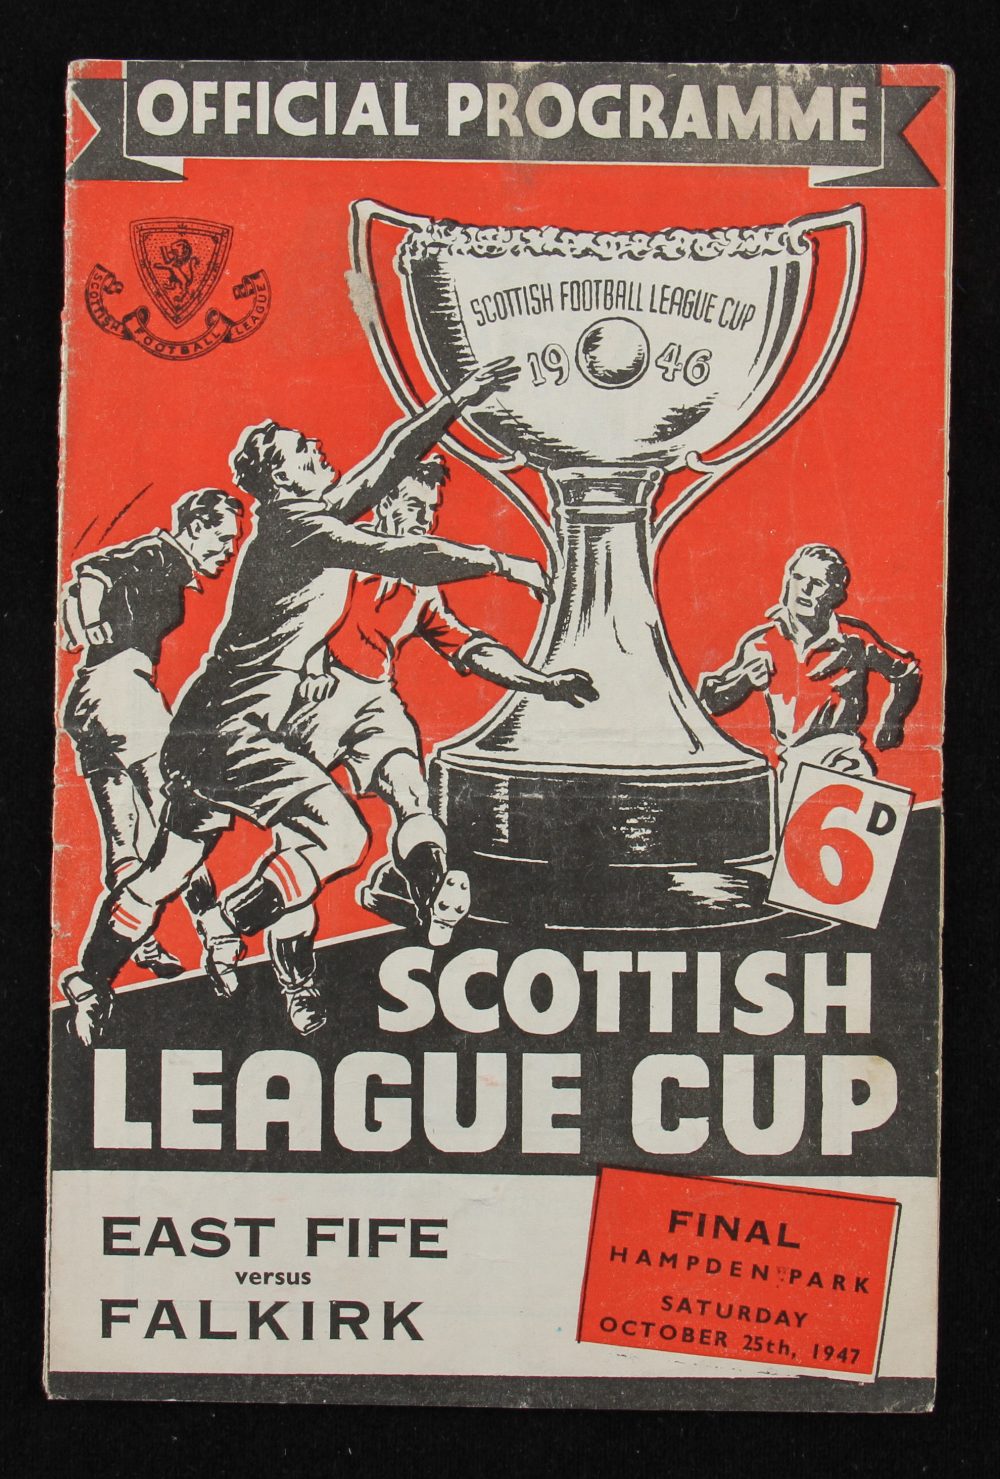 1947 Scottish league cup final East Fife v Falkirk match programme 25 October 1947 at Hampden Park